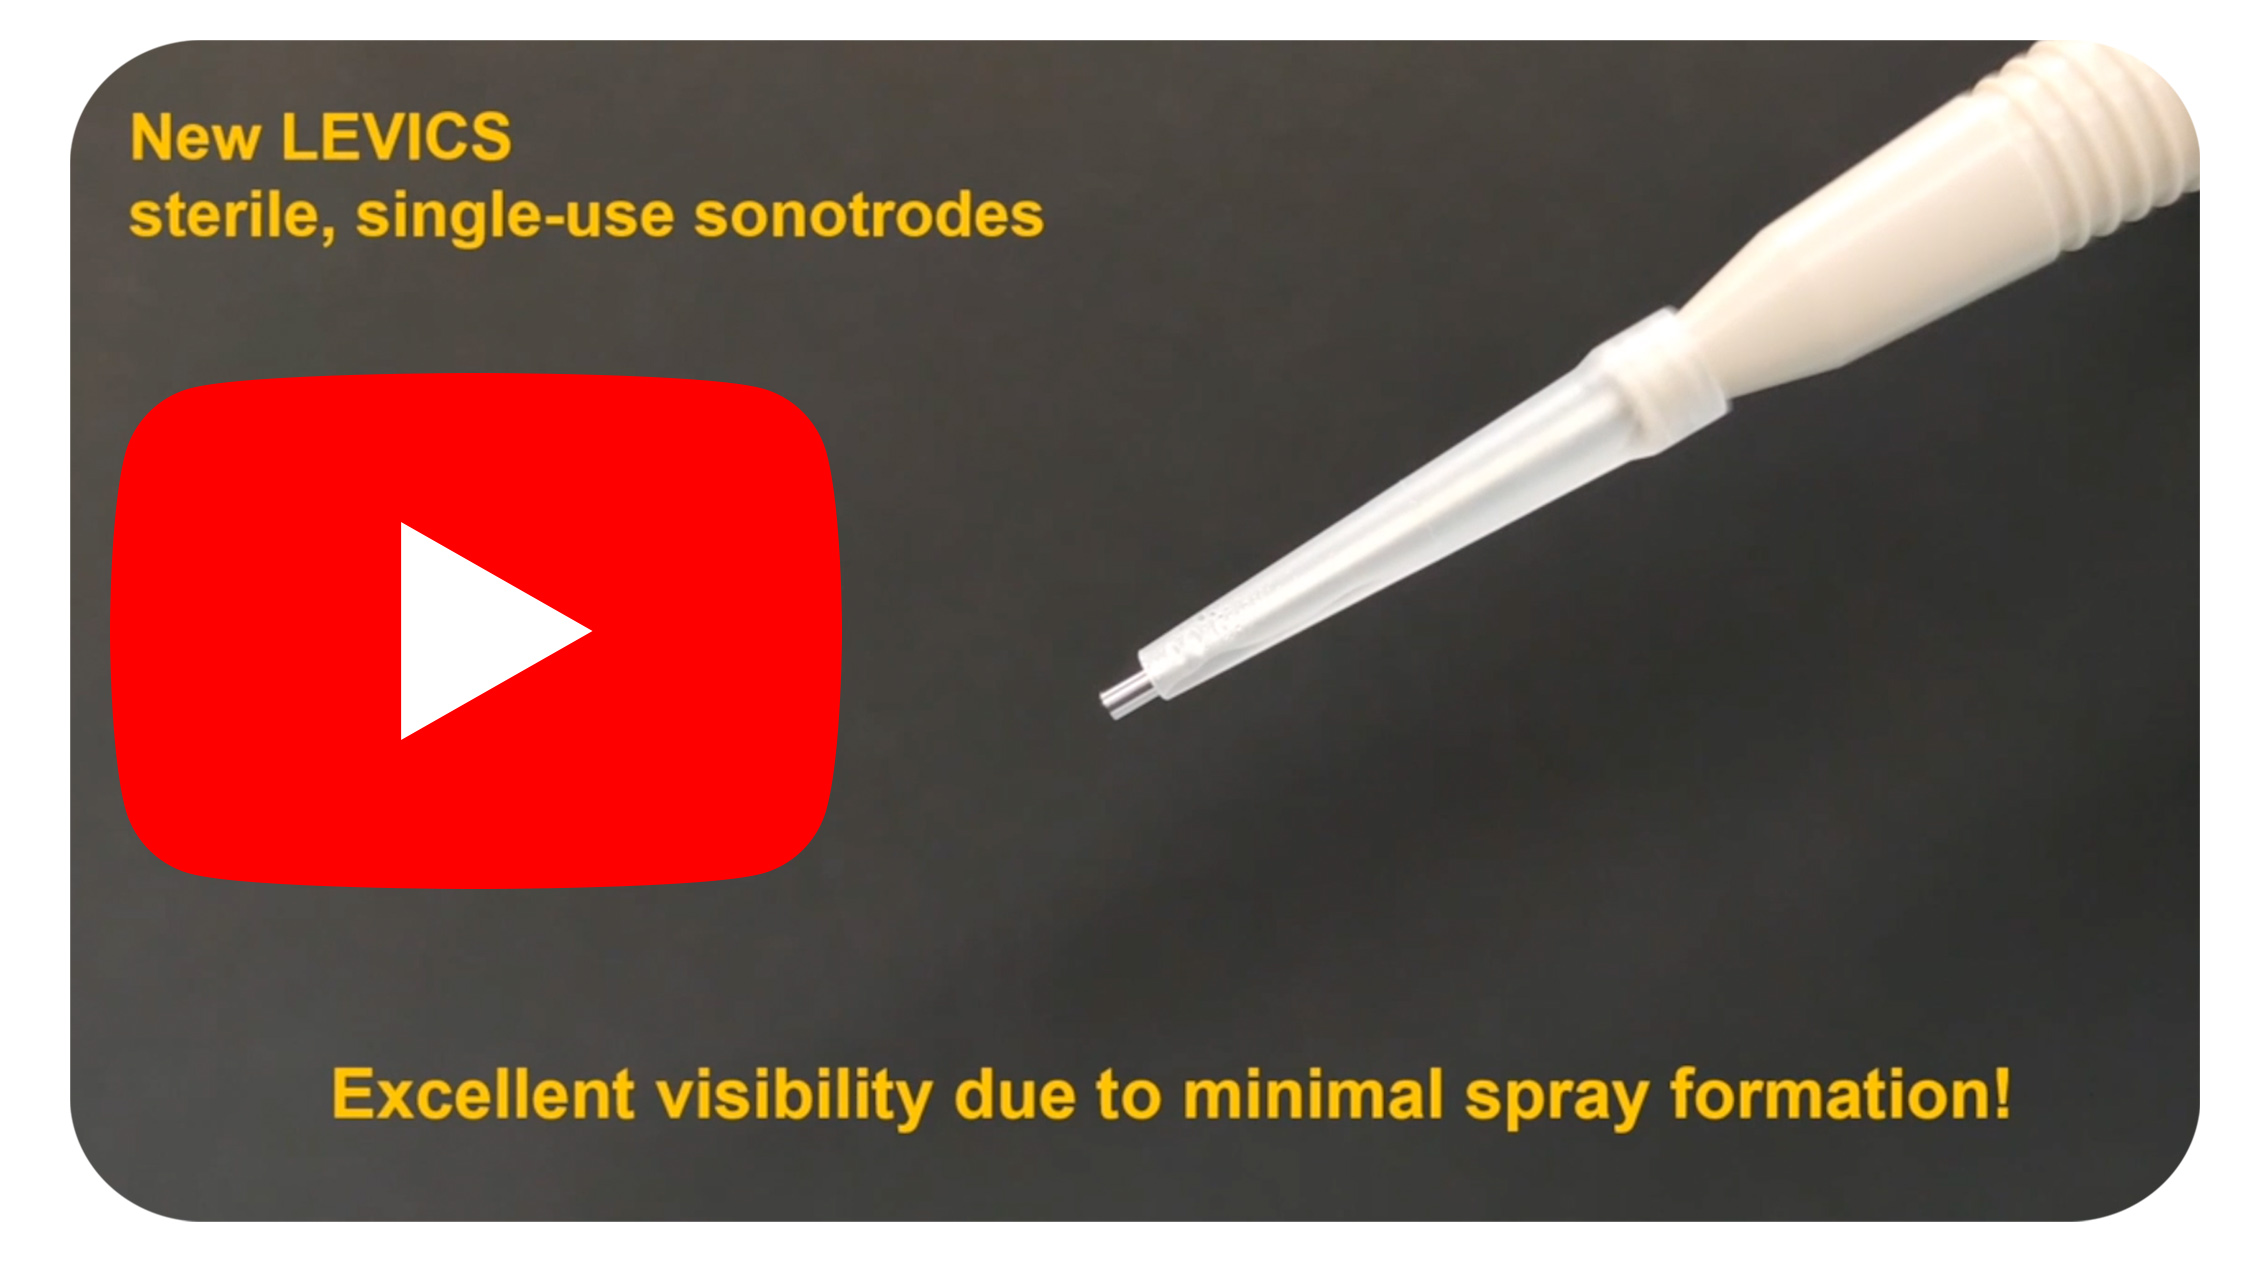 p7 - video 1 improved sonotrode spray